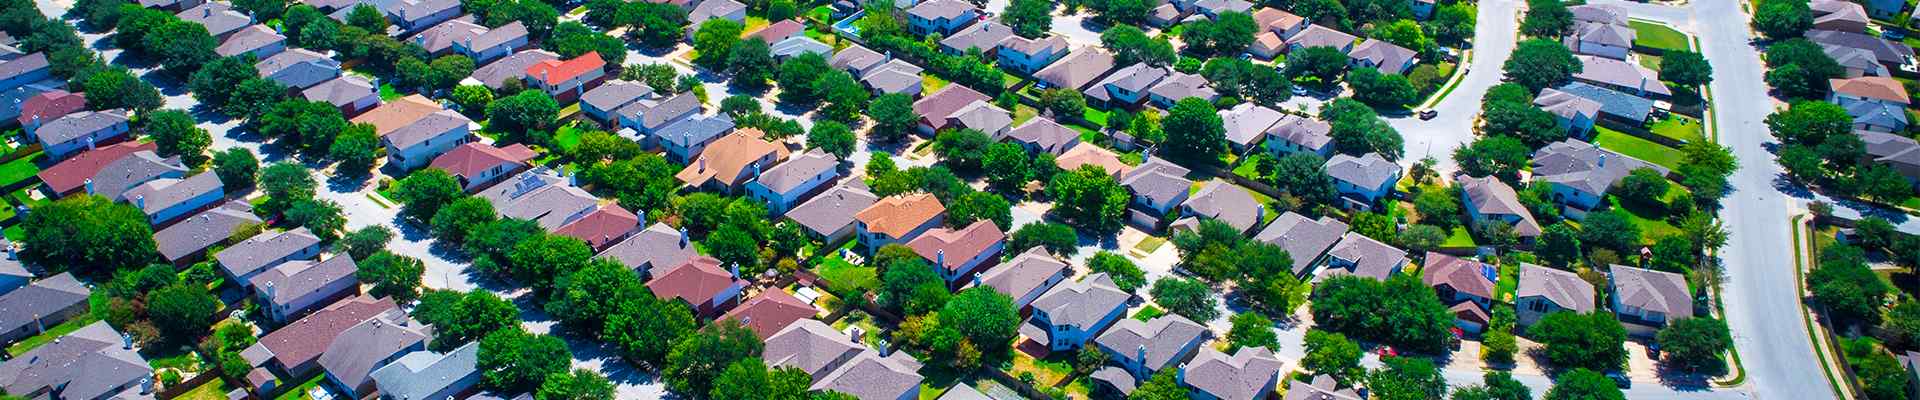 a suburban neighborhood in sachse texas